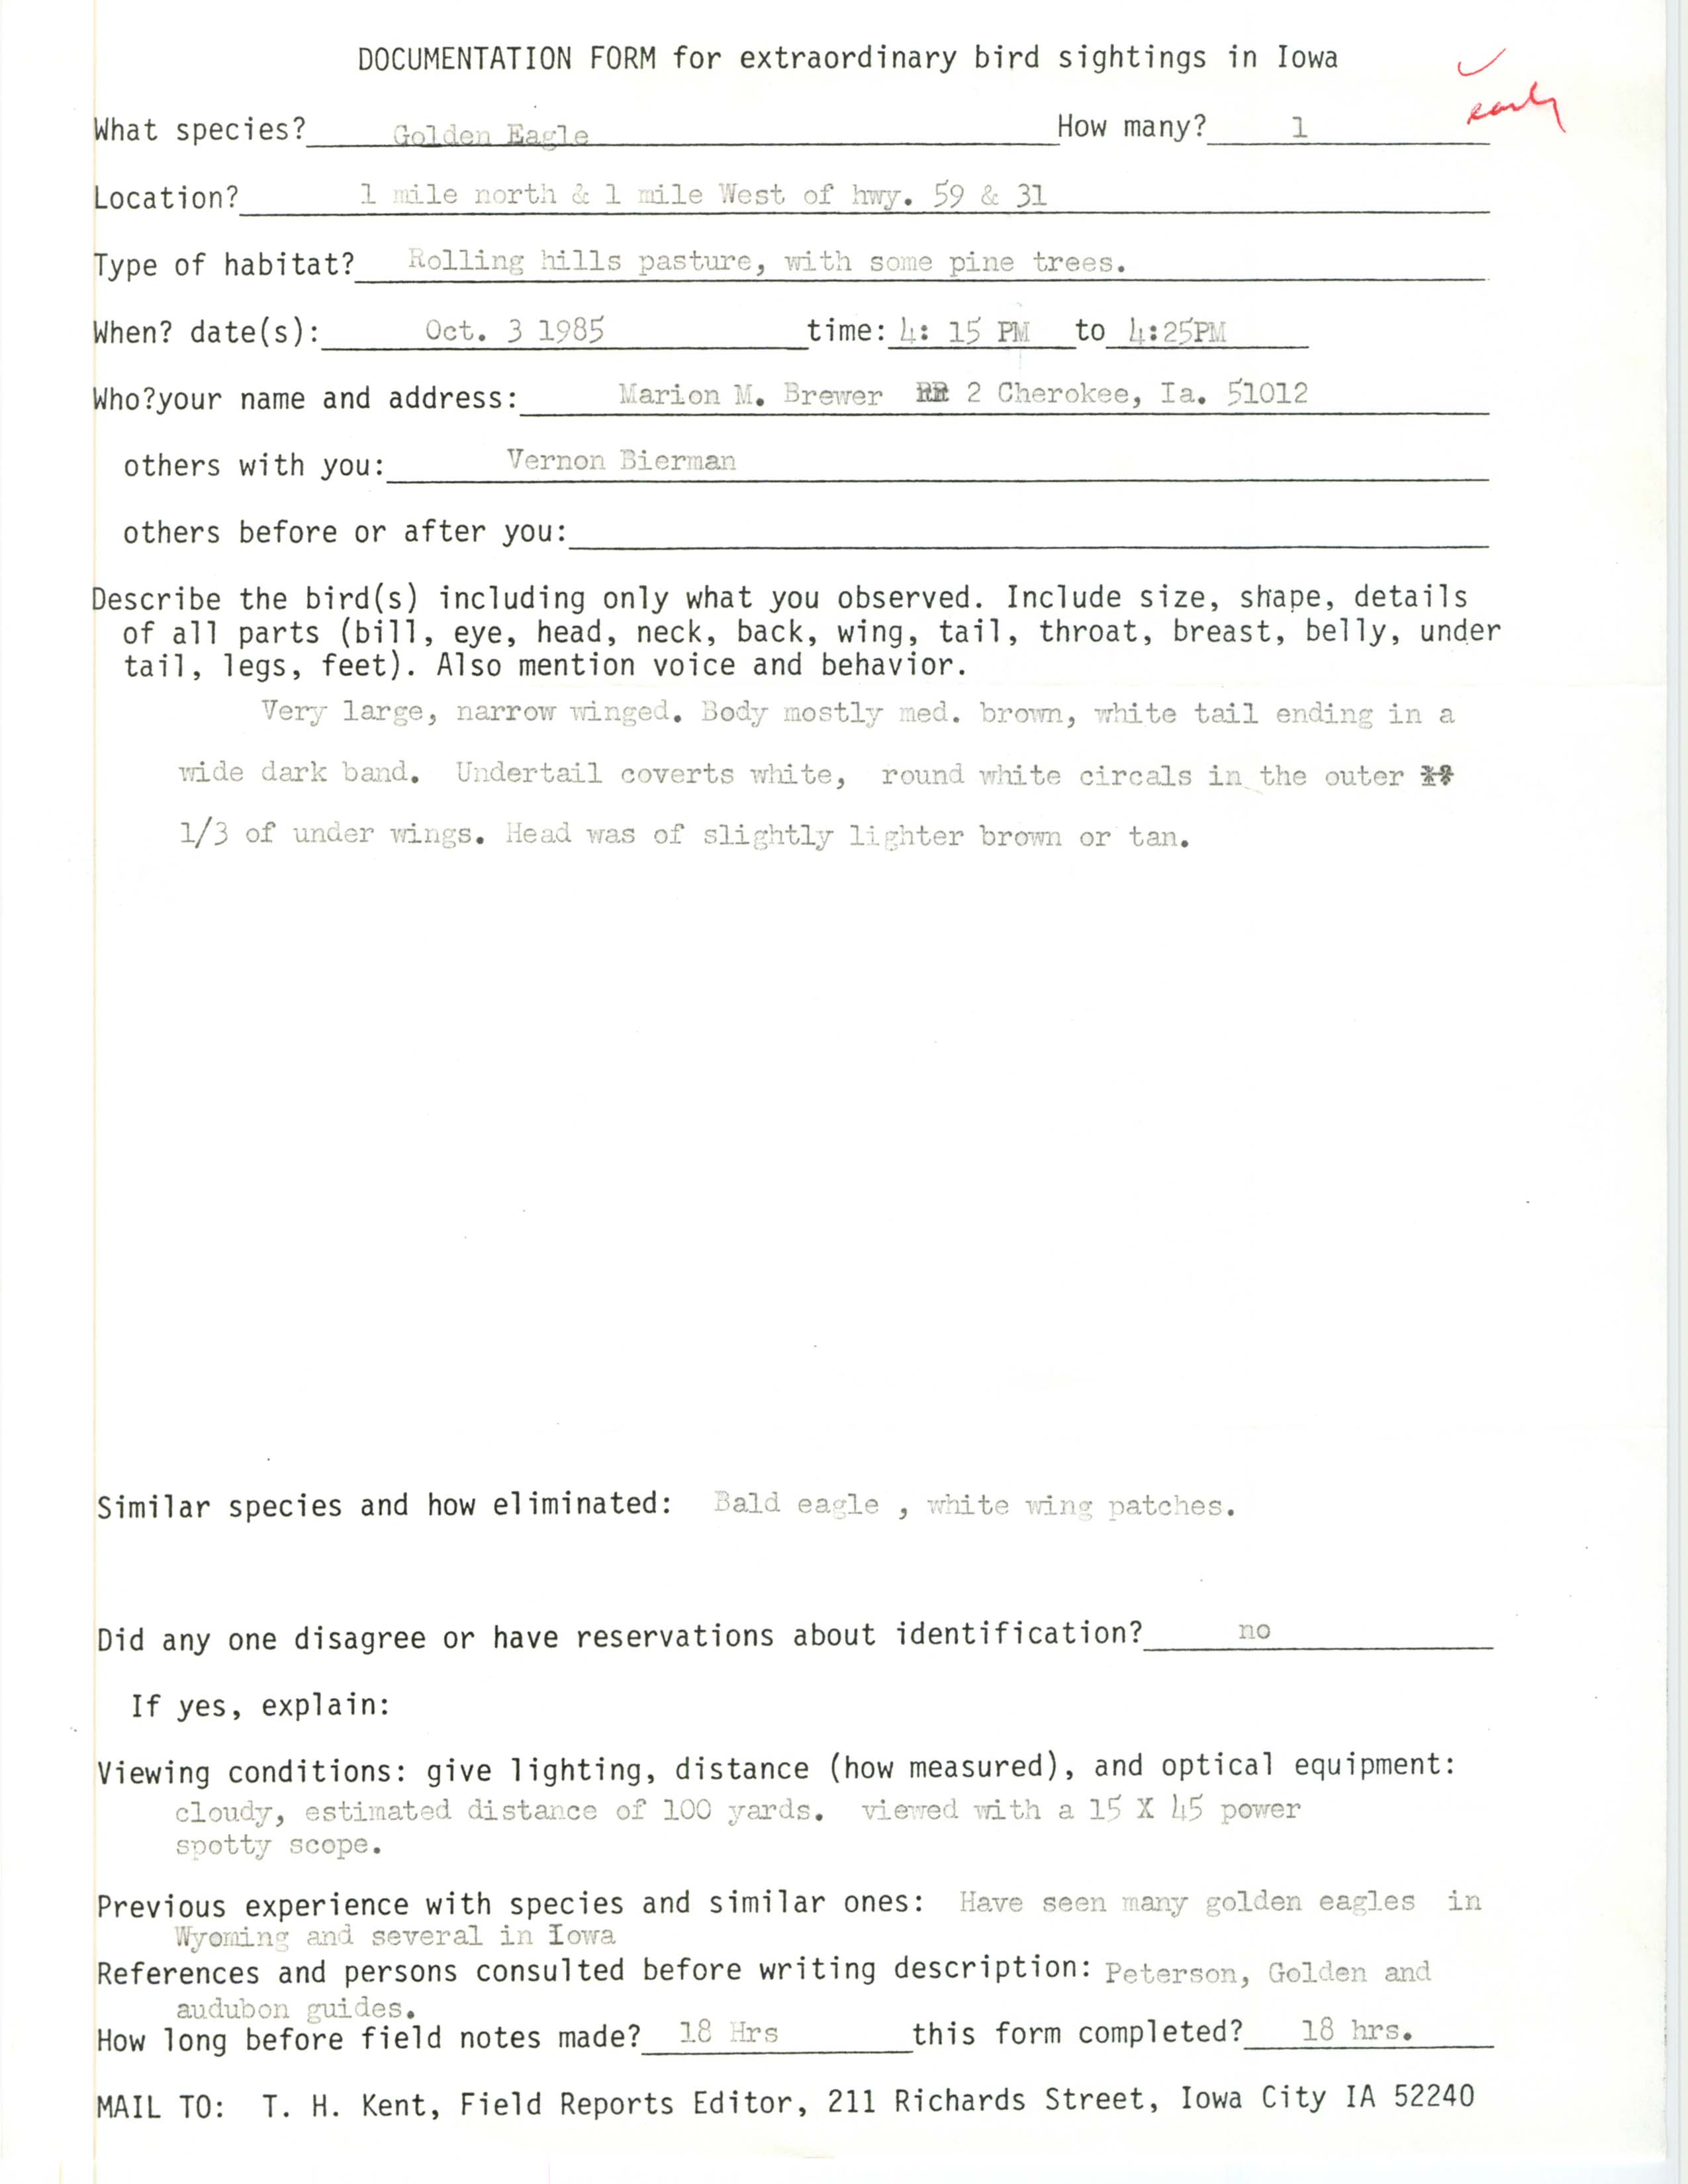 Rare bird documentation form for Golden Eagle near Silver Creek in Cherokee County, 1985